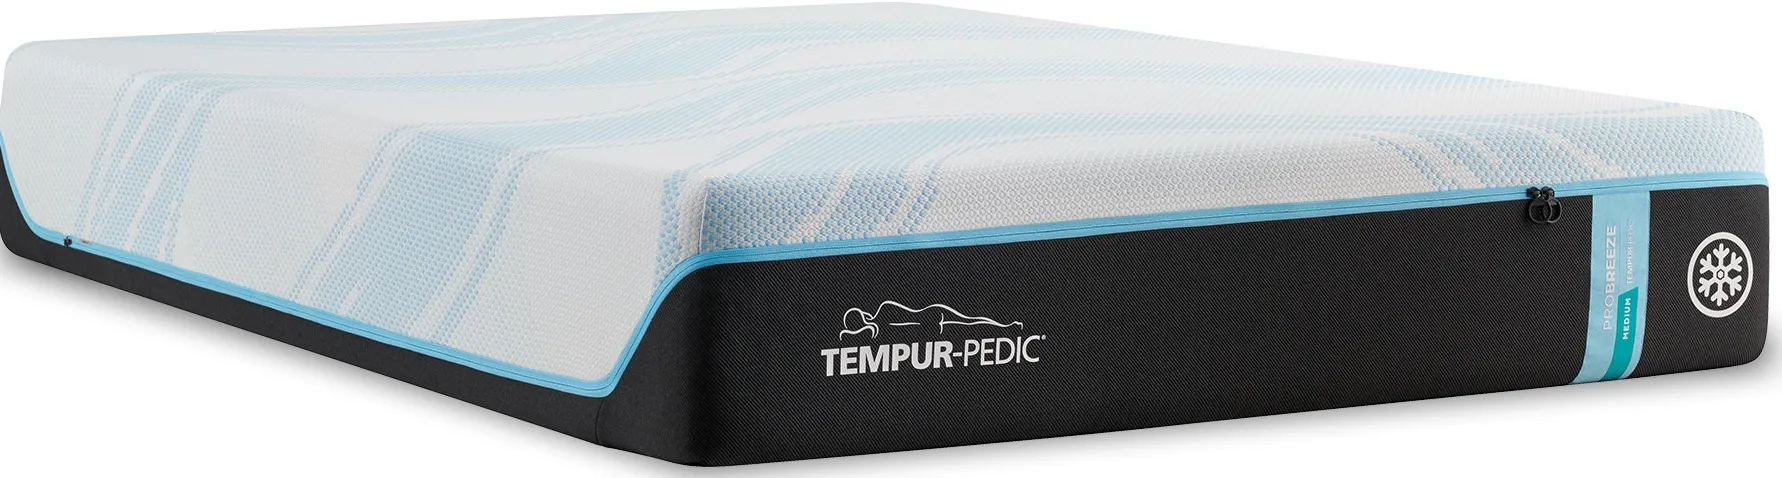 Tempur-Pedic Tempur-ProBreeze Twin XL Medium Mattress Only